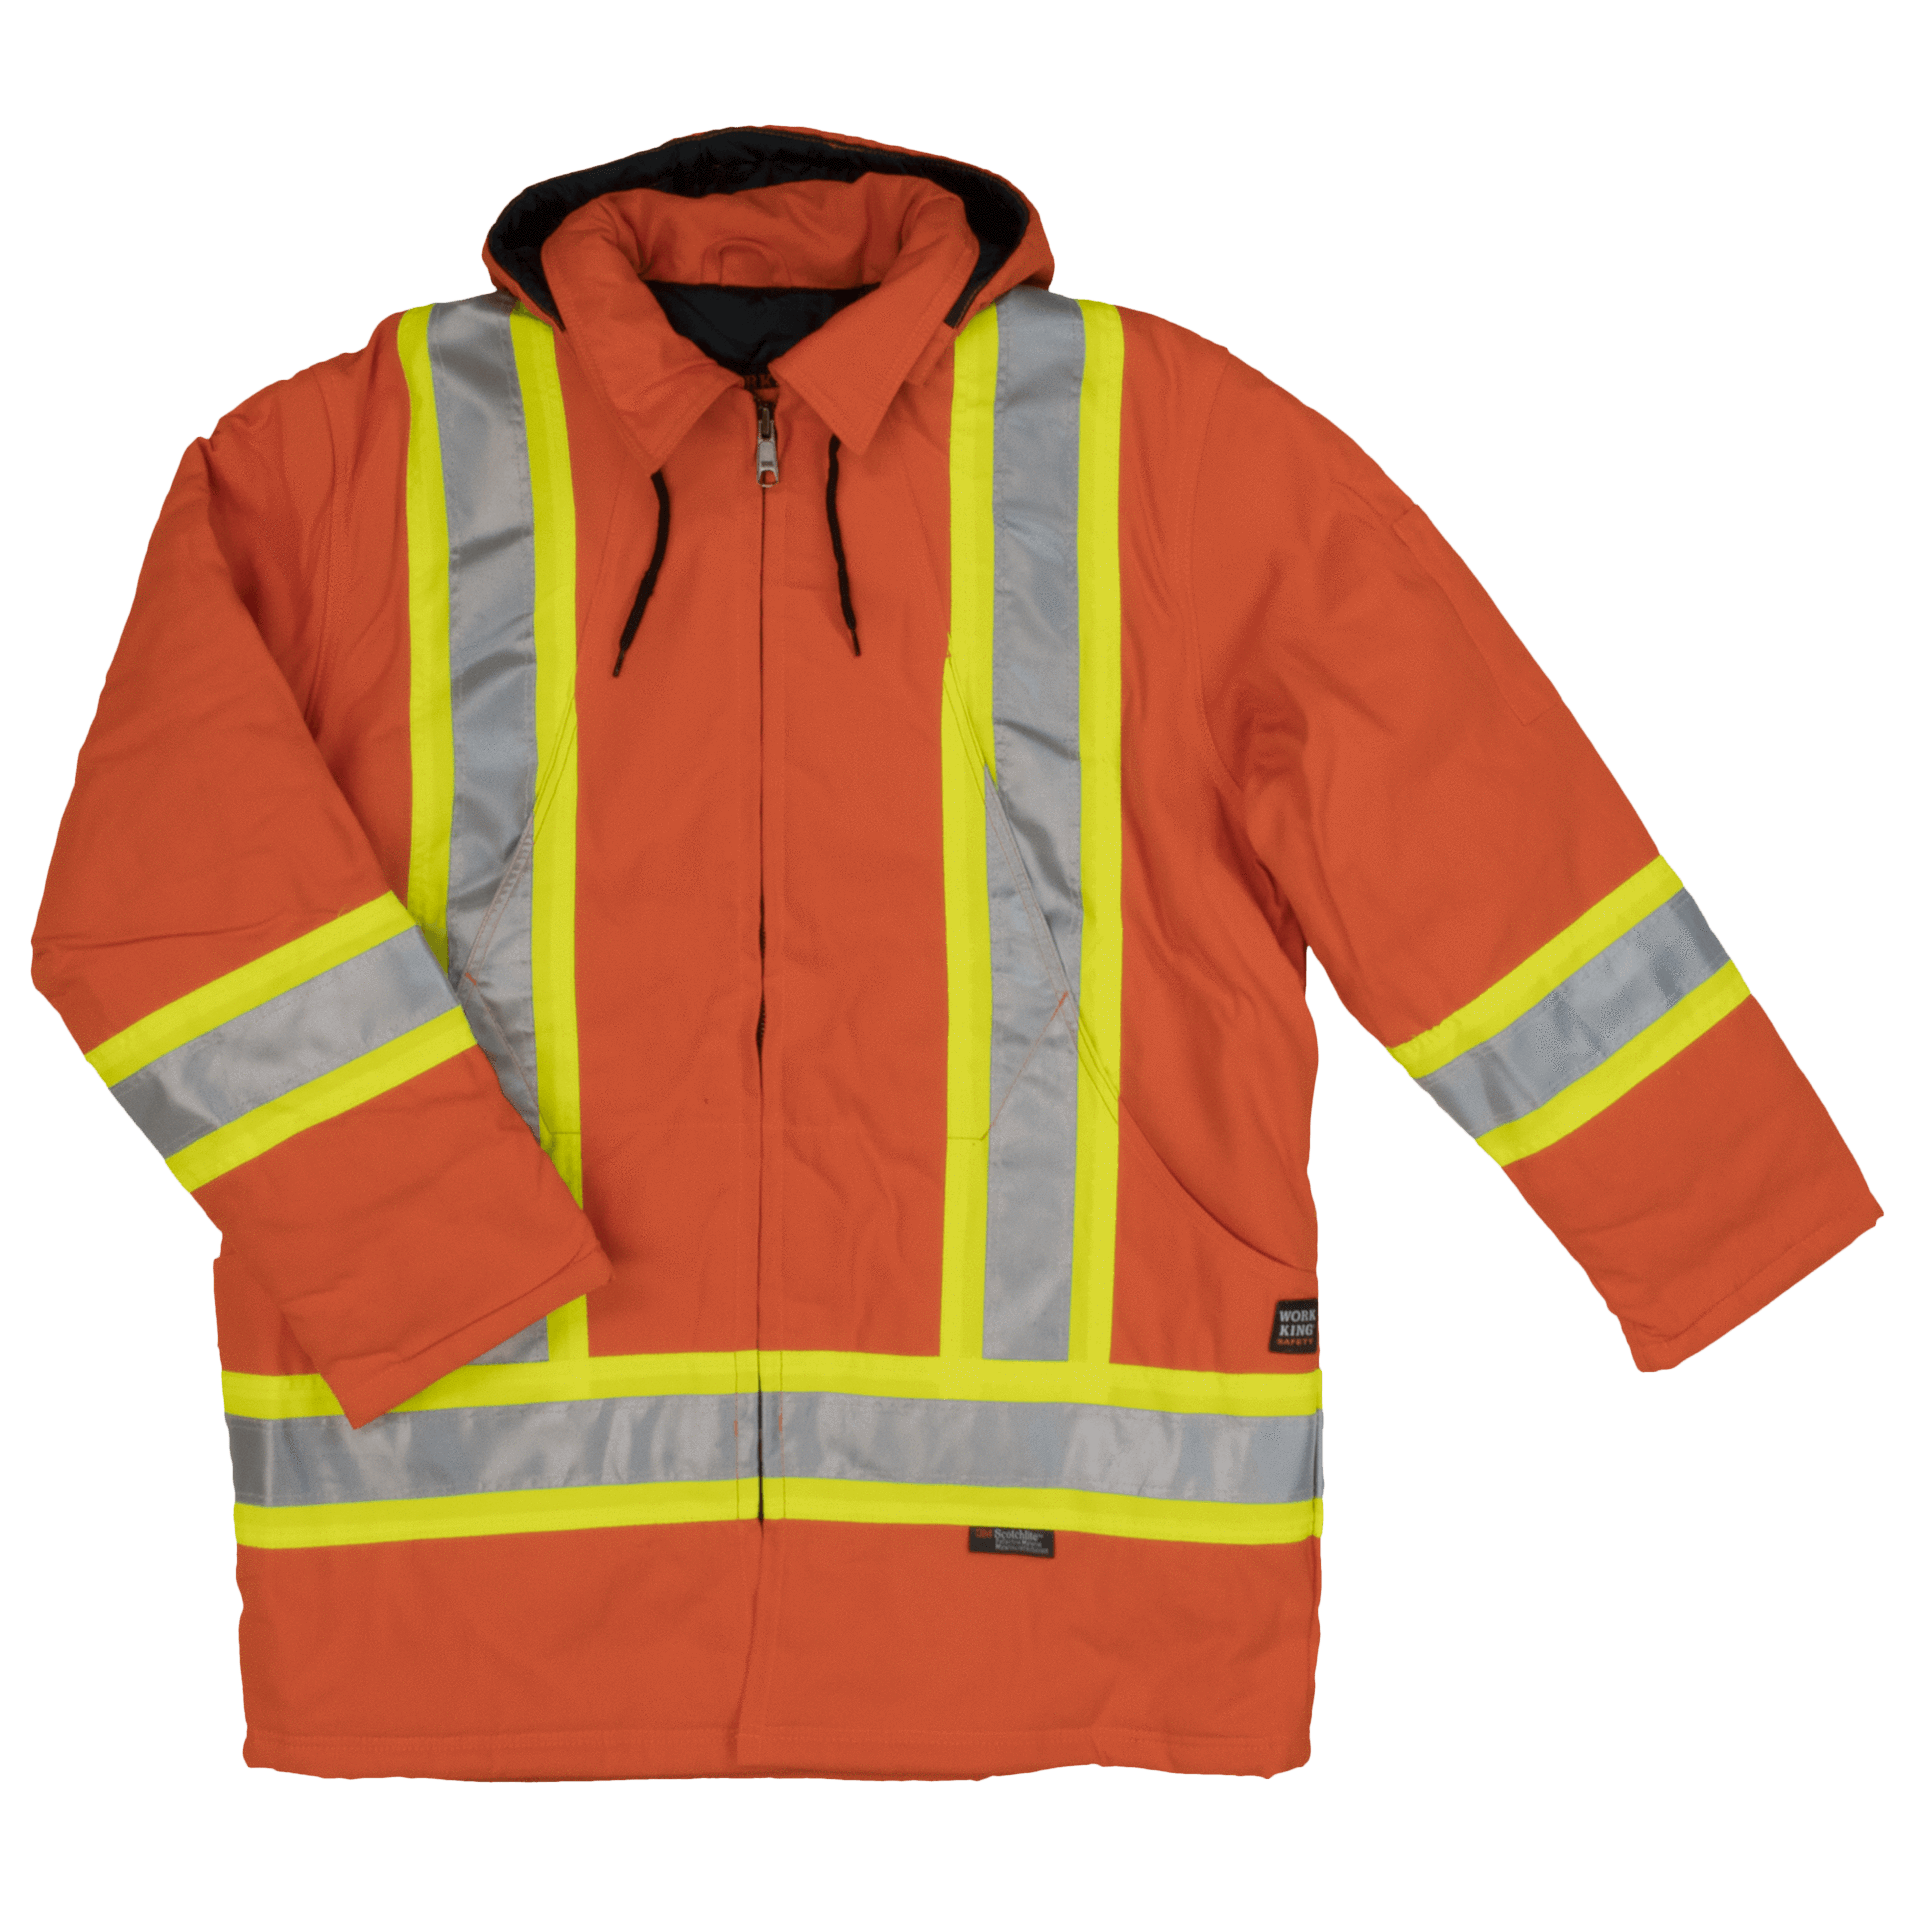 Tough Duck s157 Cotton Duck Winter Safety Parka | Orange | Limited Size Selection Hi Vis Work Wear - Cleanflow